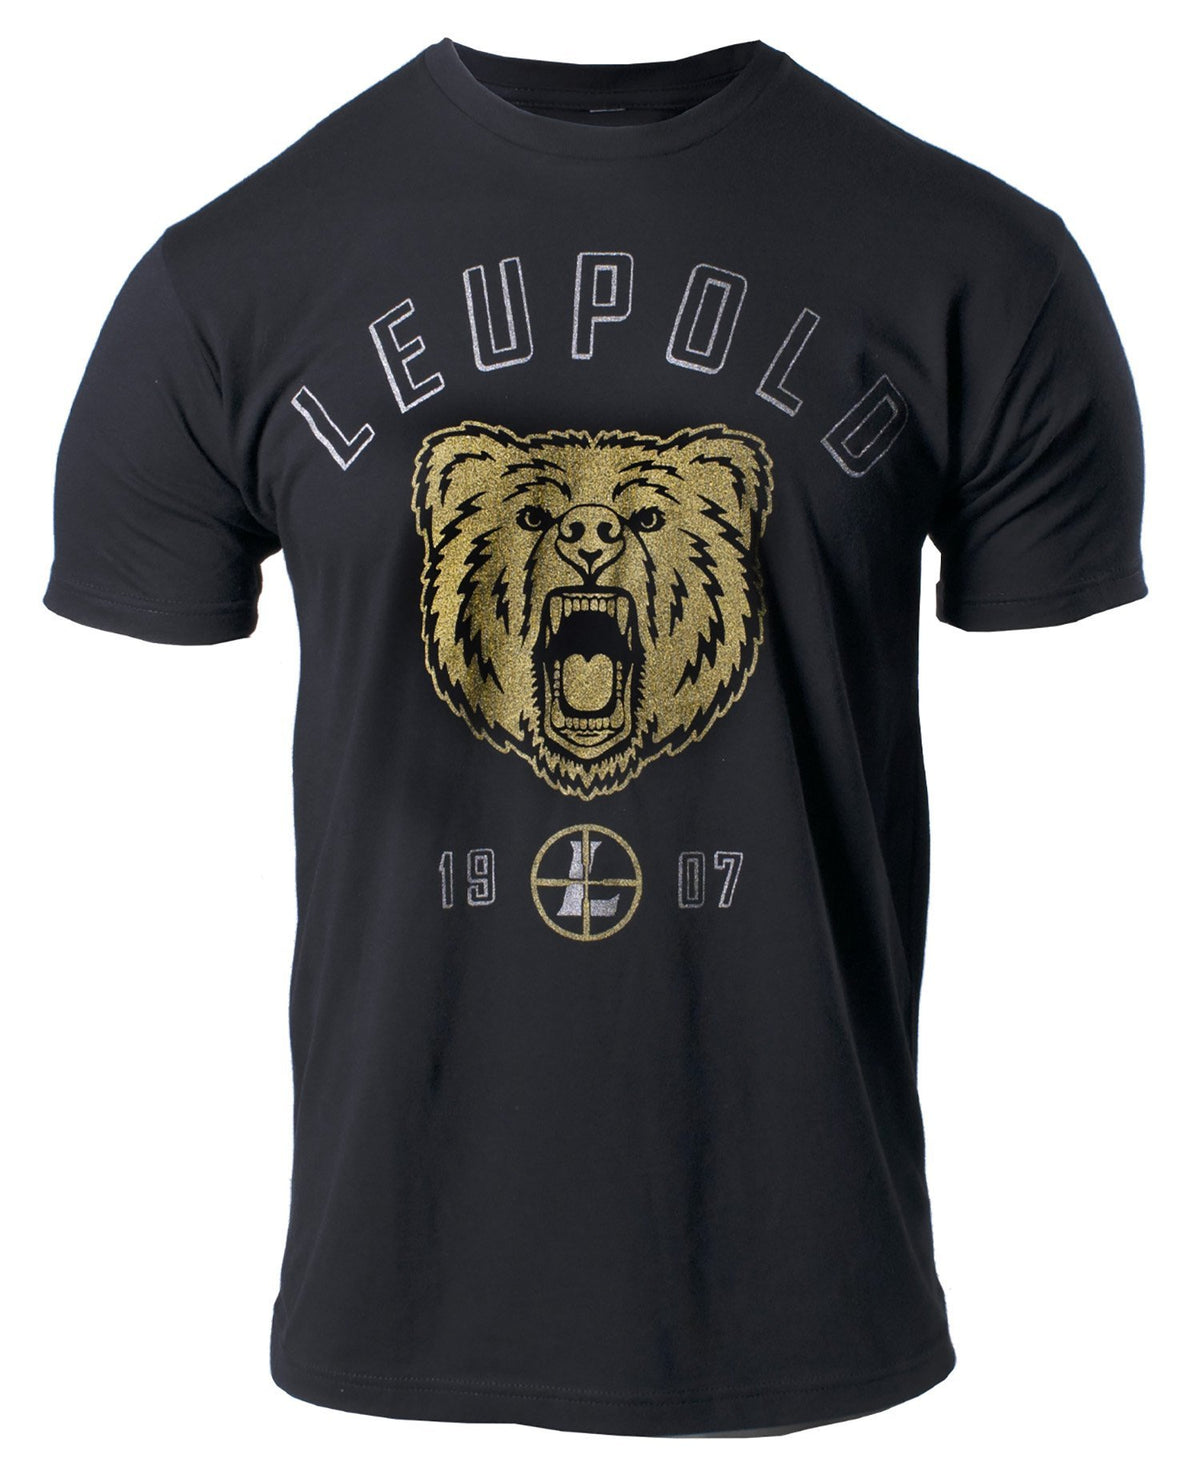 Leupold Kodiak T-Shirt Black Medium Short Sleeve - Pacific Flyway Supplies